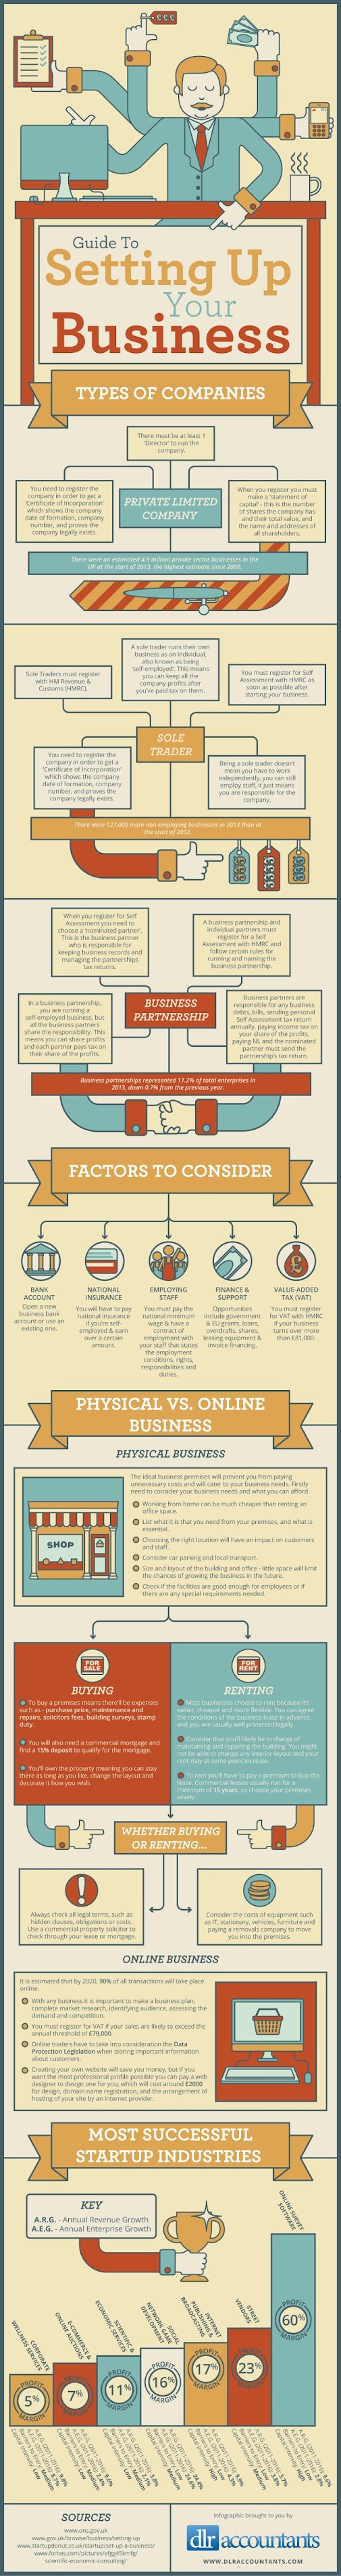 https://s3.amazonaws.com/gf-infographics/DLR-business-guide%20.jpg